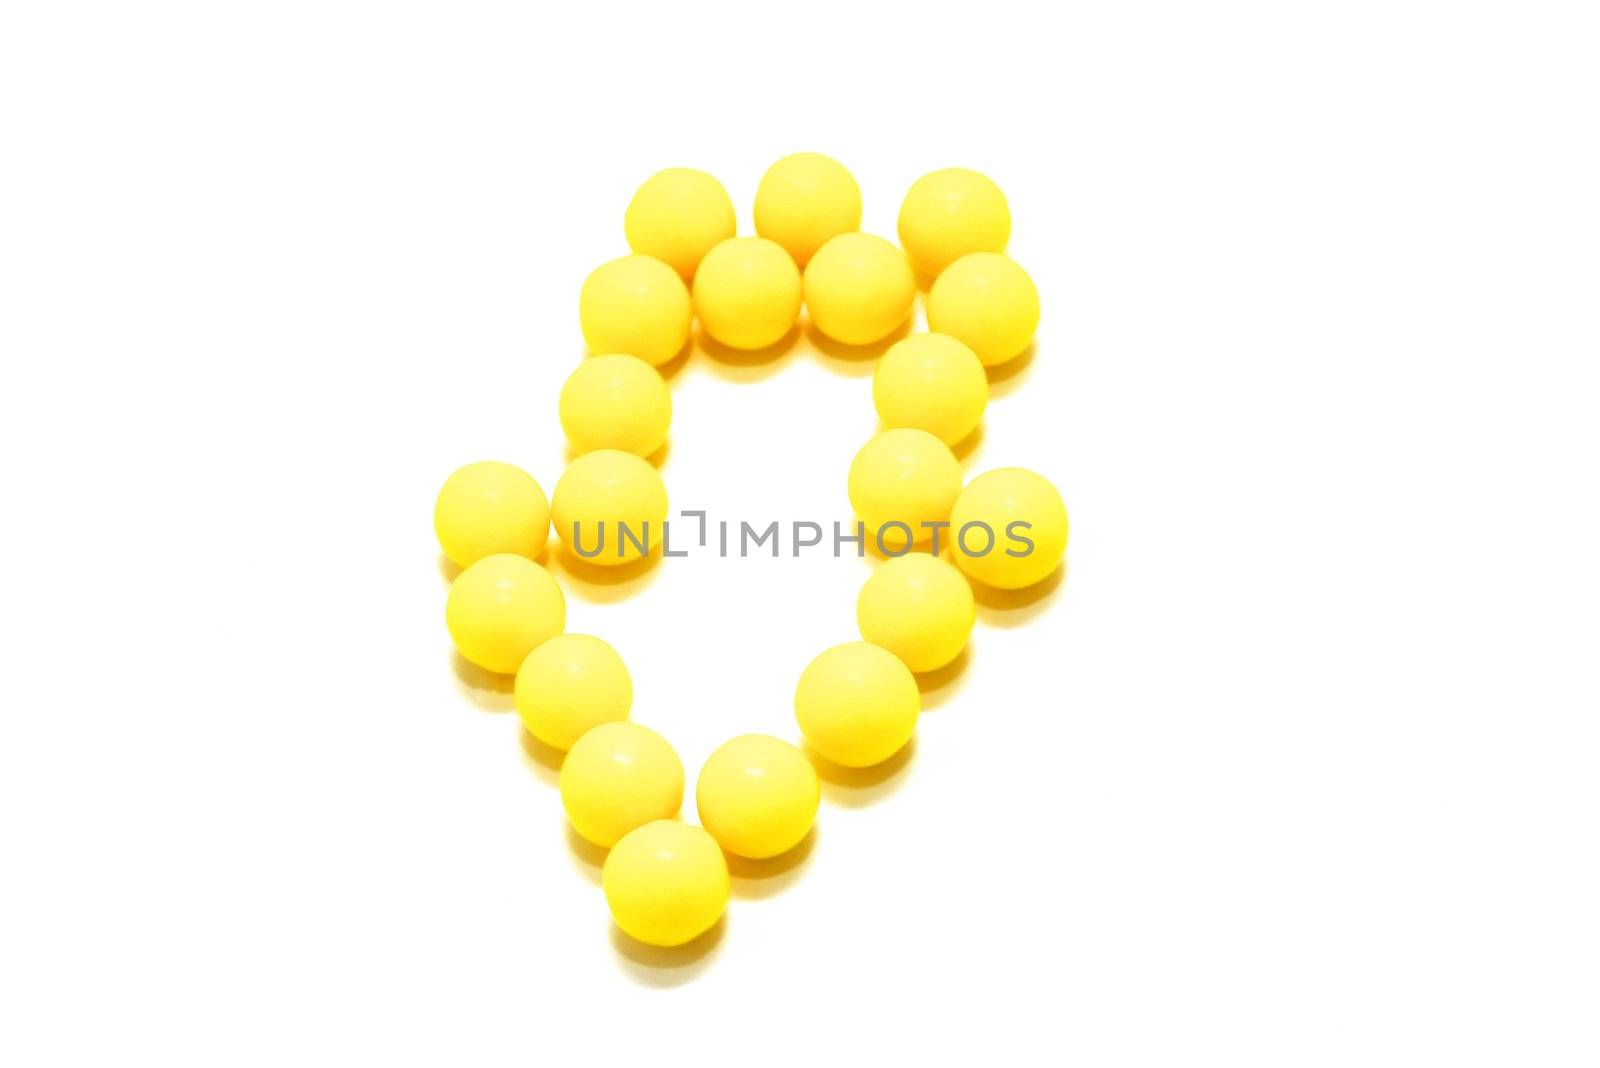 Vitamin pills by alshadsky